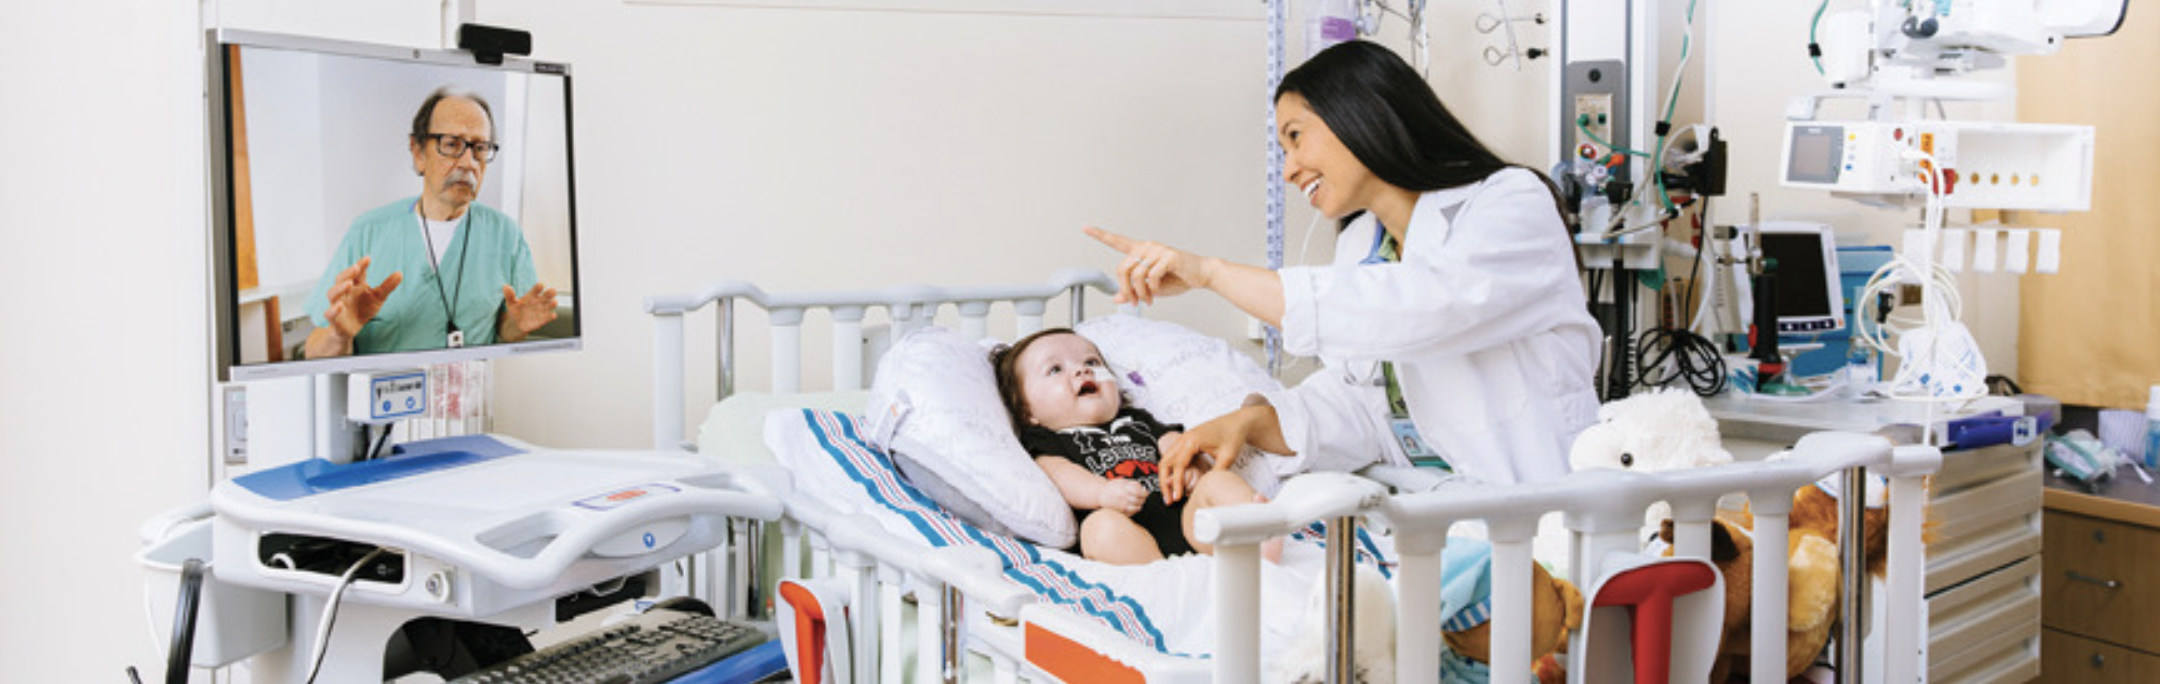 New Pediatrix TeleNeurology Program Helps Hospitalized Infants and Children